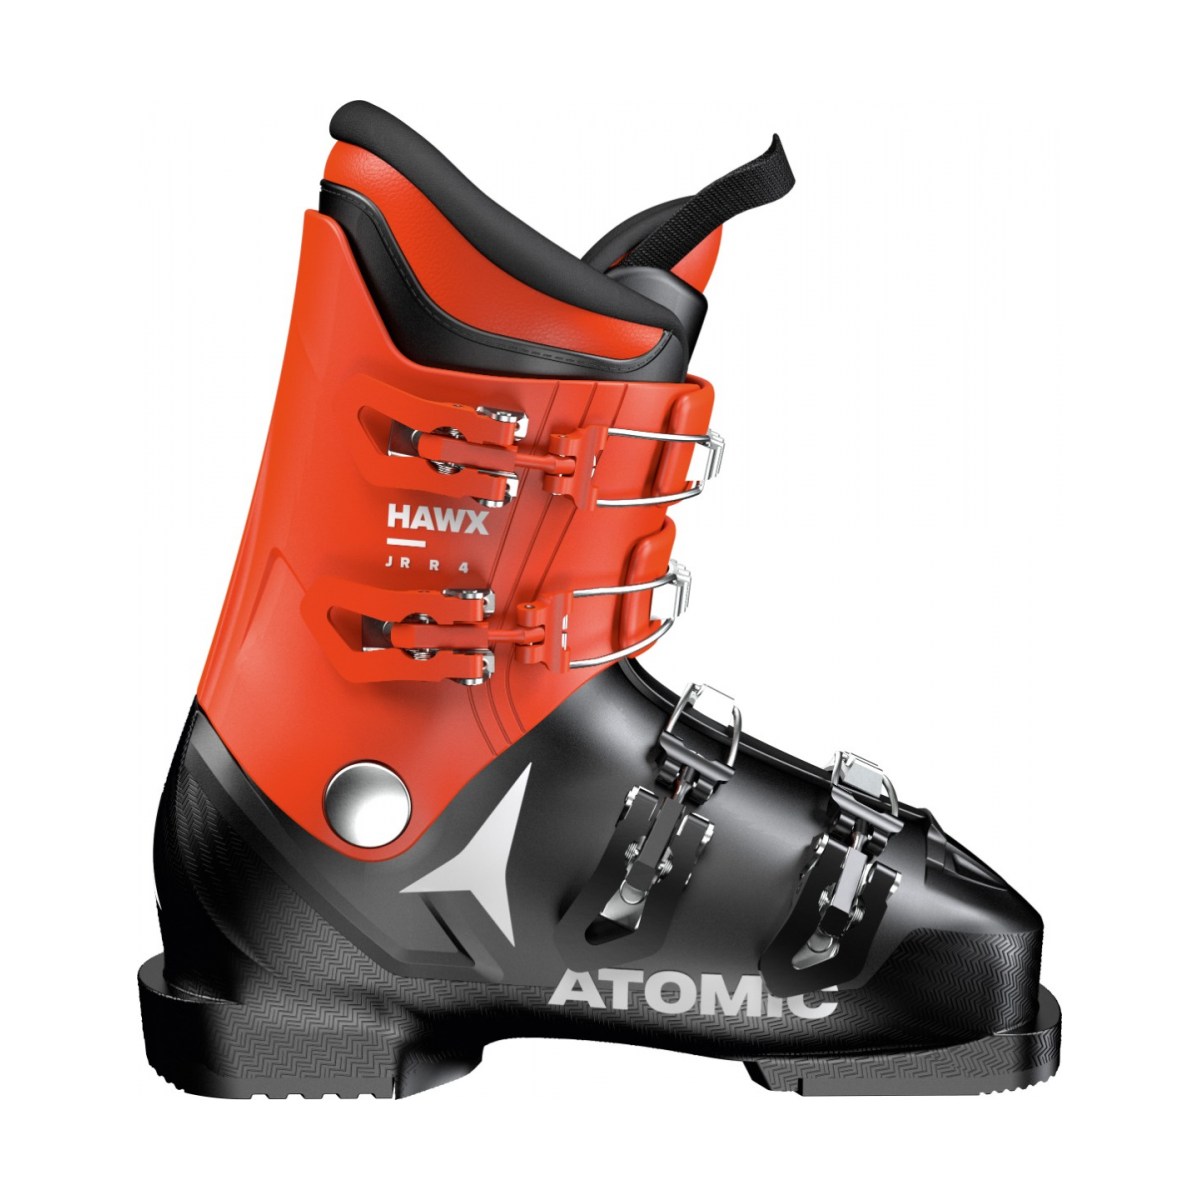 ATOMIC HAWX JR R4 kalnu slēpošanas zābaki - black/red